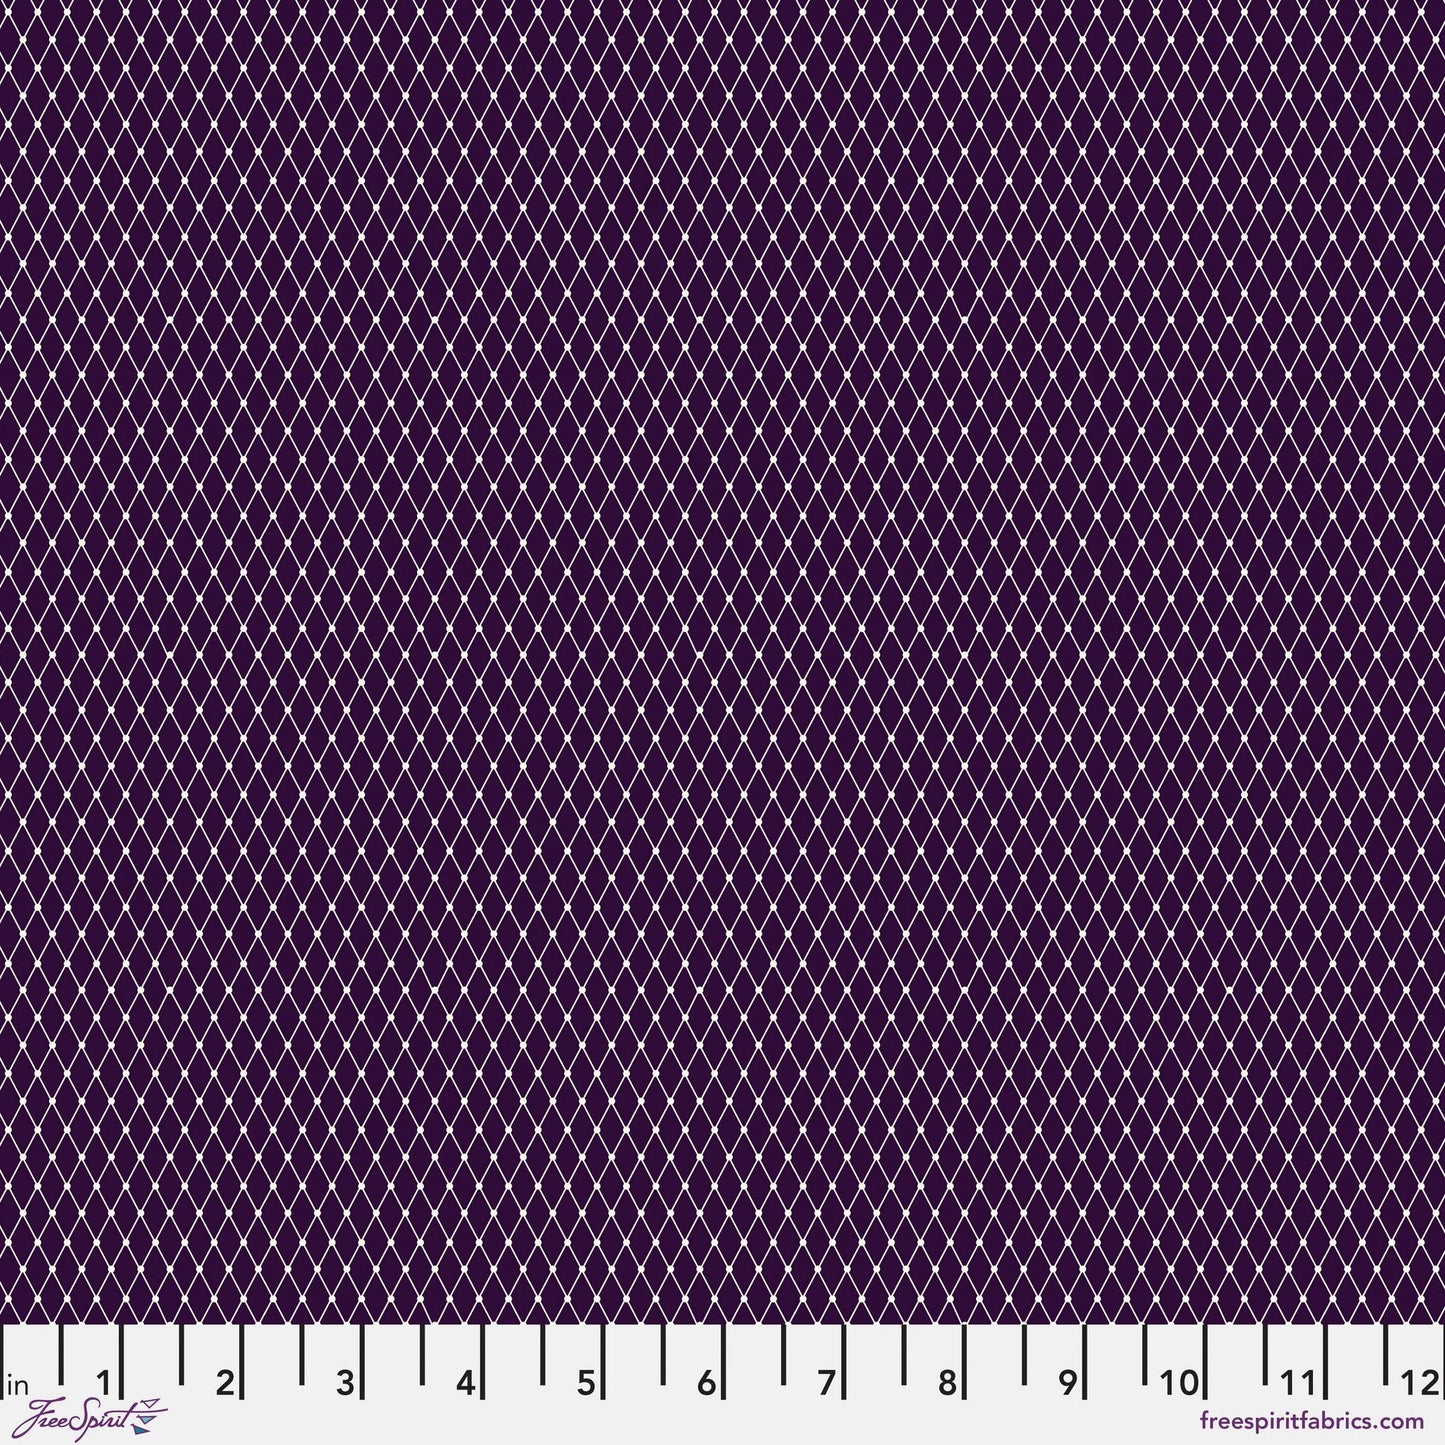 Nightshade Deja Vu 8 Pcs Bundle Tula Pink FreeSpirit Fabrics 100% Quilters Cotton Fabric Fetish